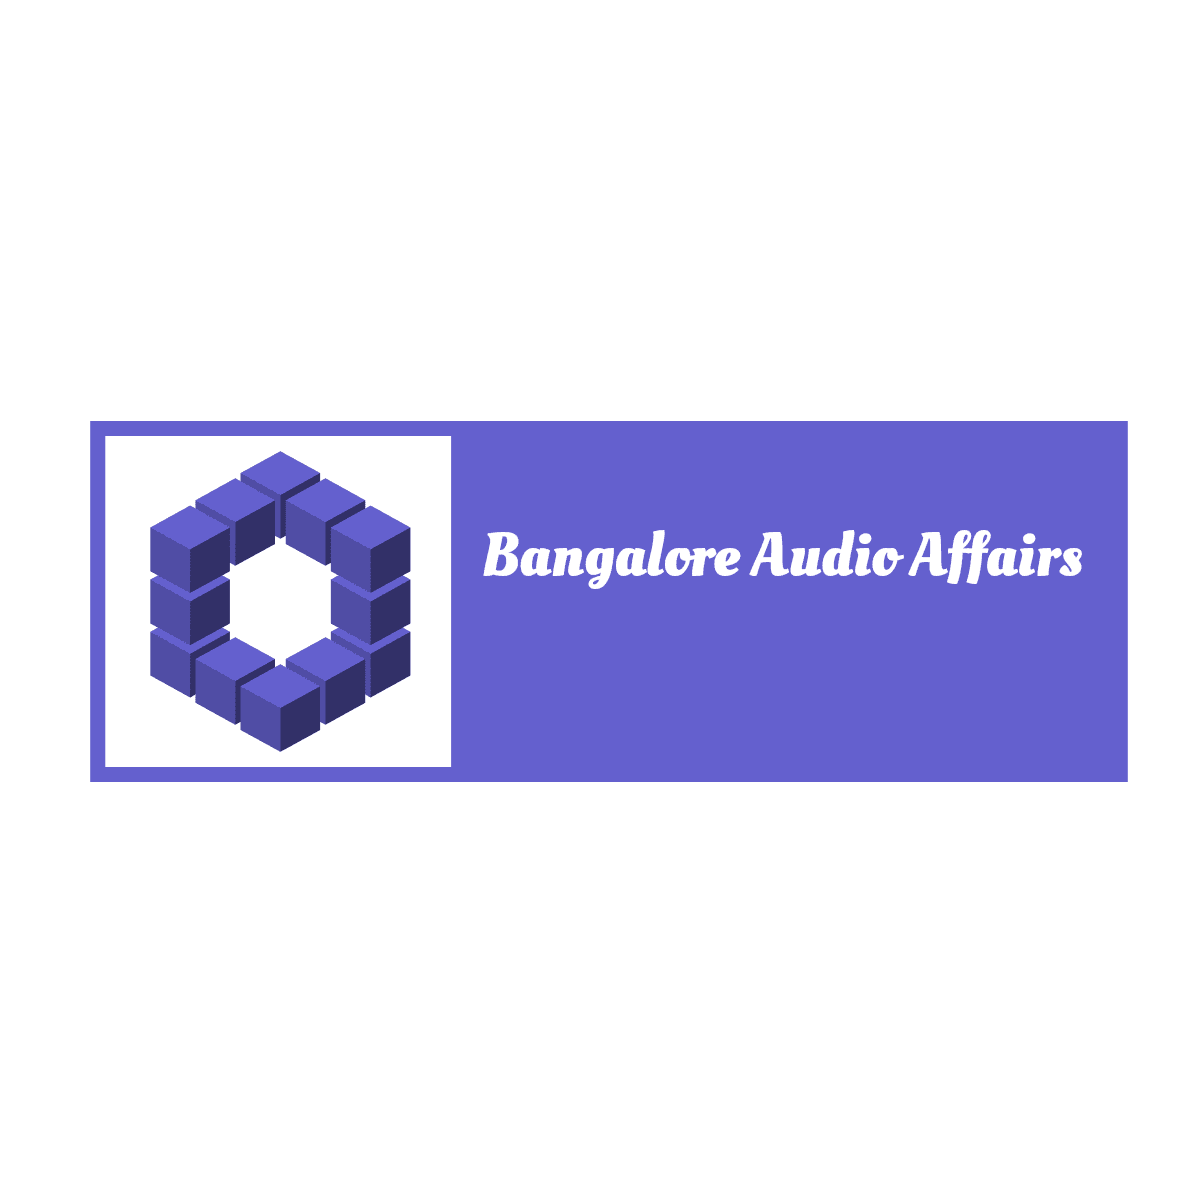 Bangalore Audio Affairs